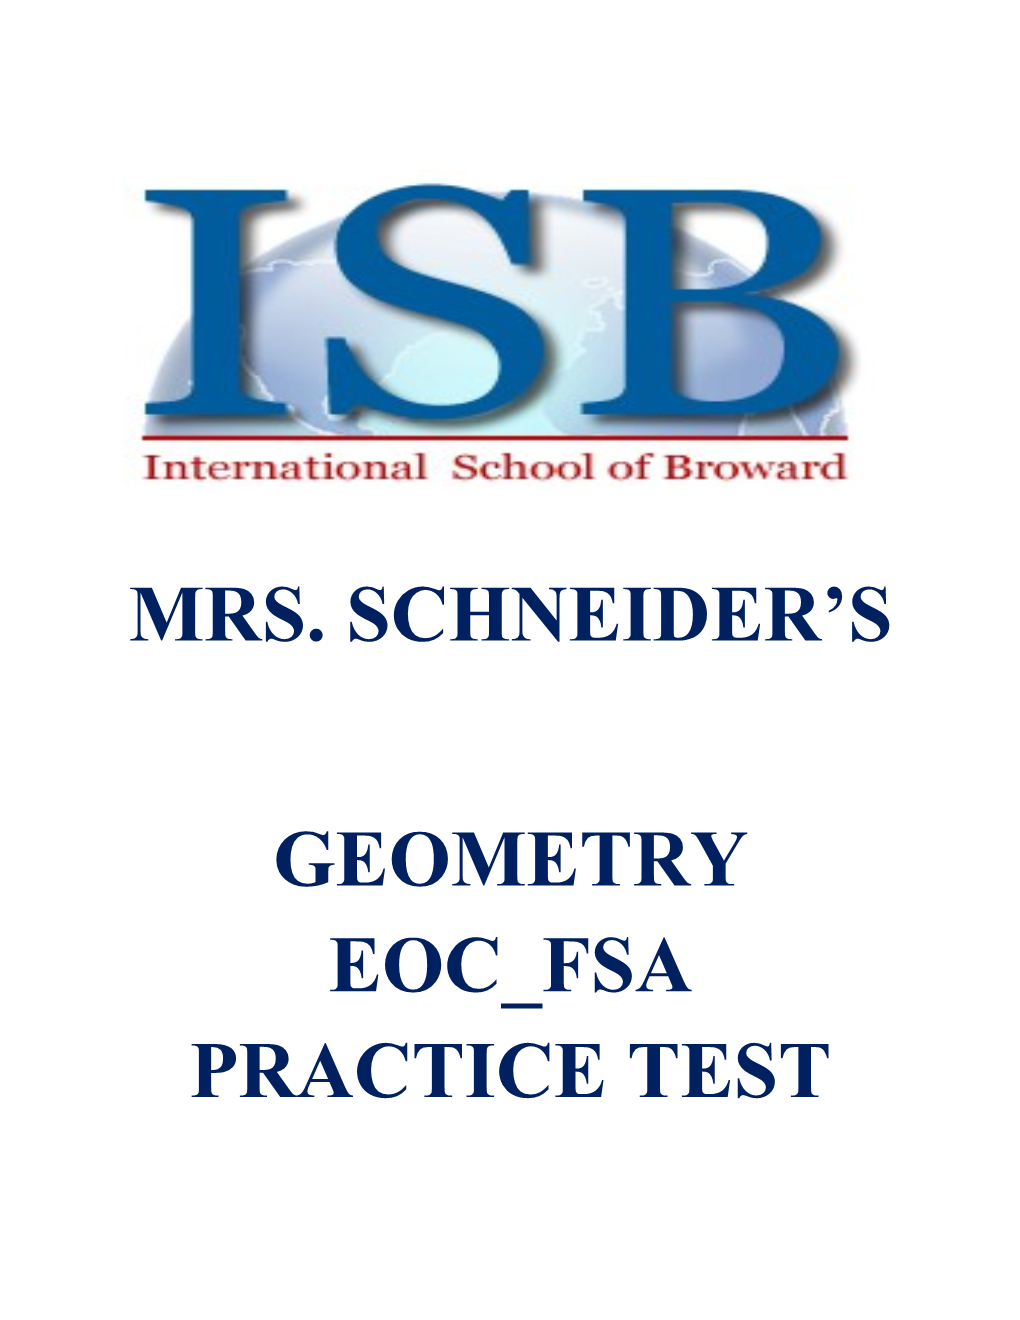 Geometry Eoc Fsa Practice Test